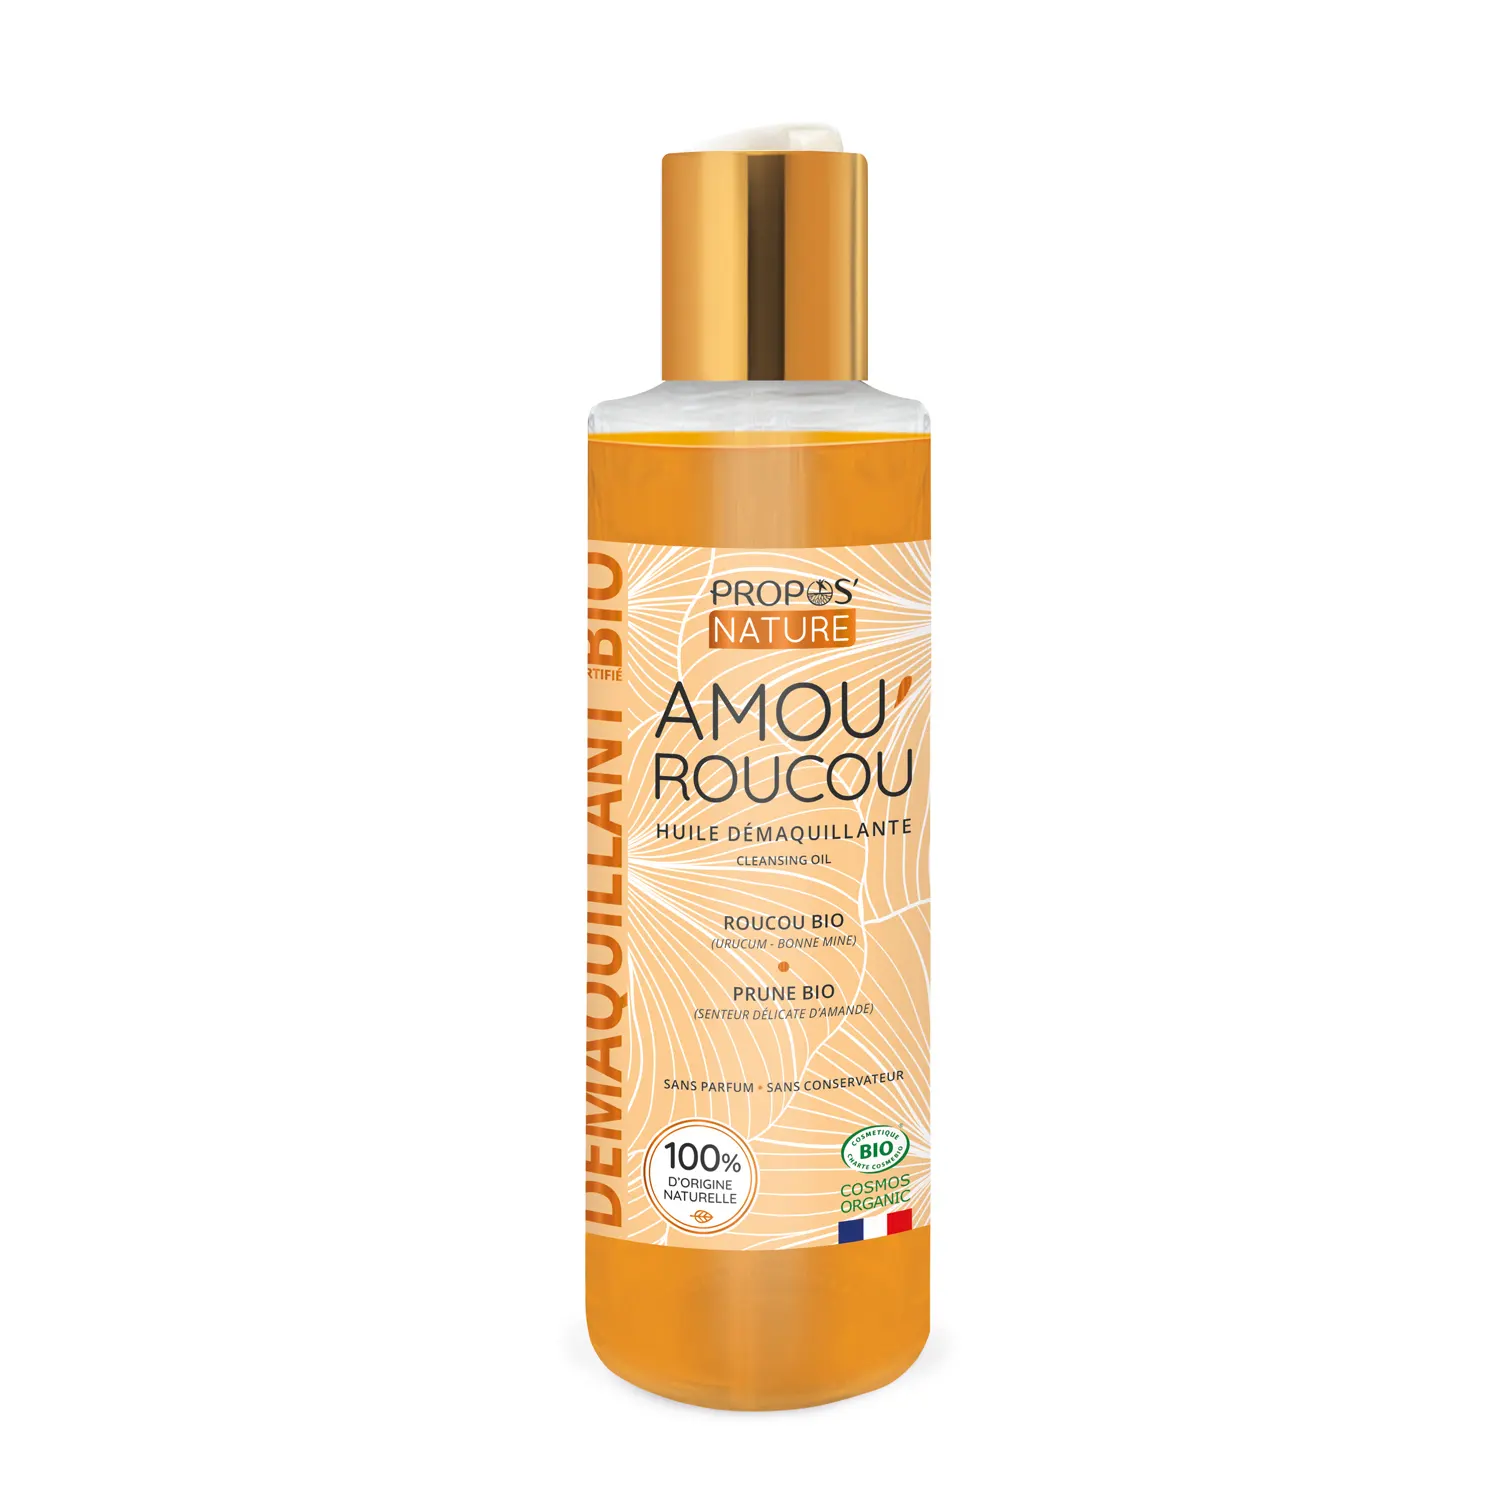 Rimozione trucco olio Amou'Roucou-Urucum-vitamina E-Beta-carotene-radianza pelle-Antiaging-prolunga abbronzatura-organico-125ml